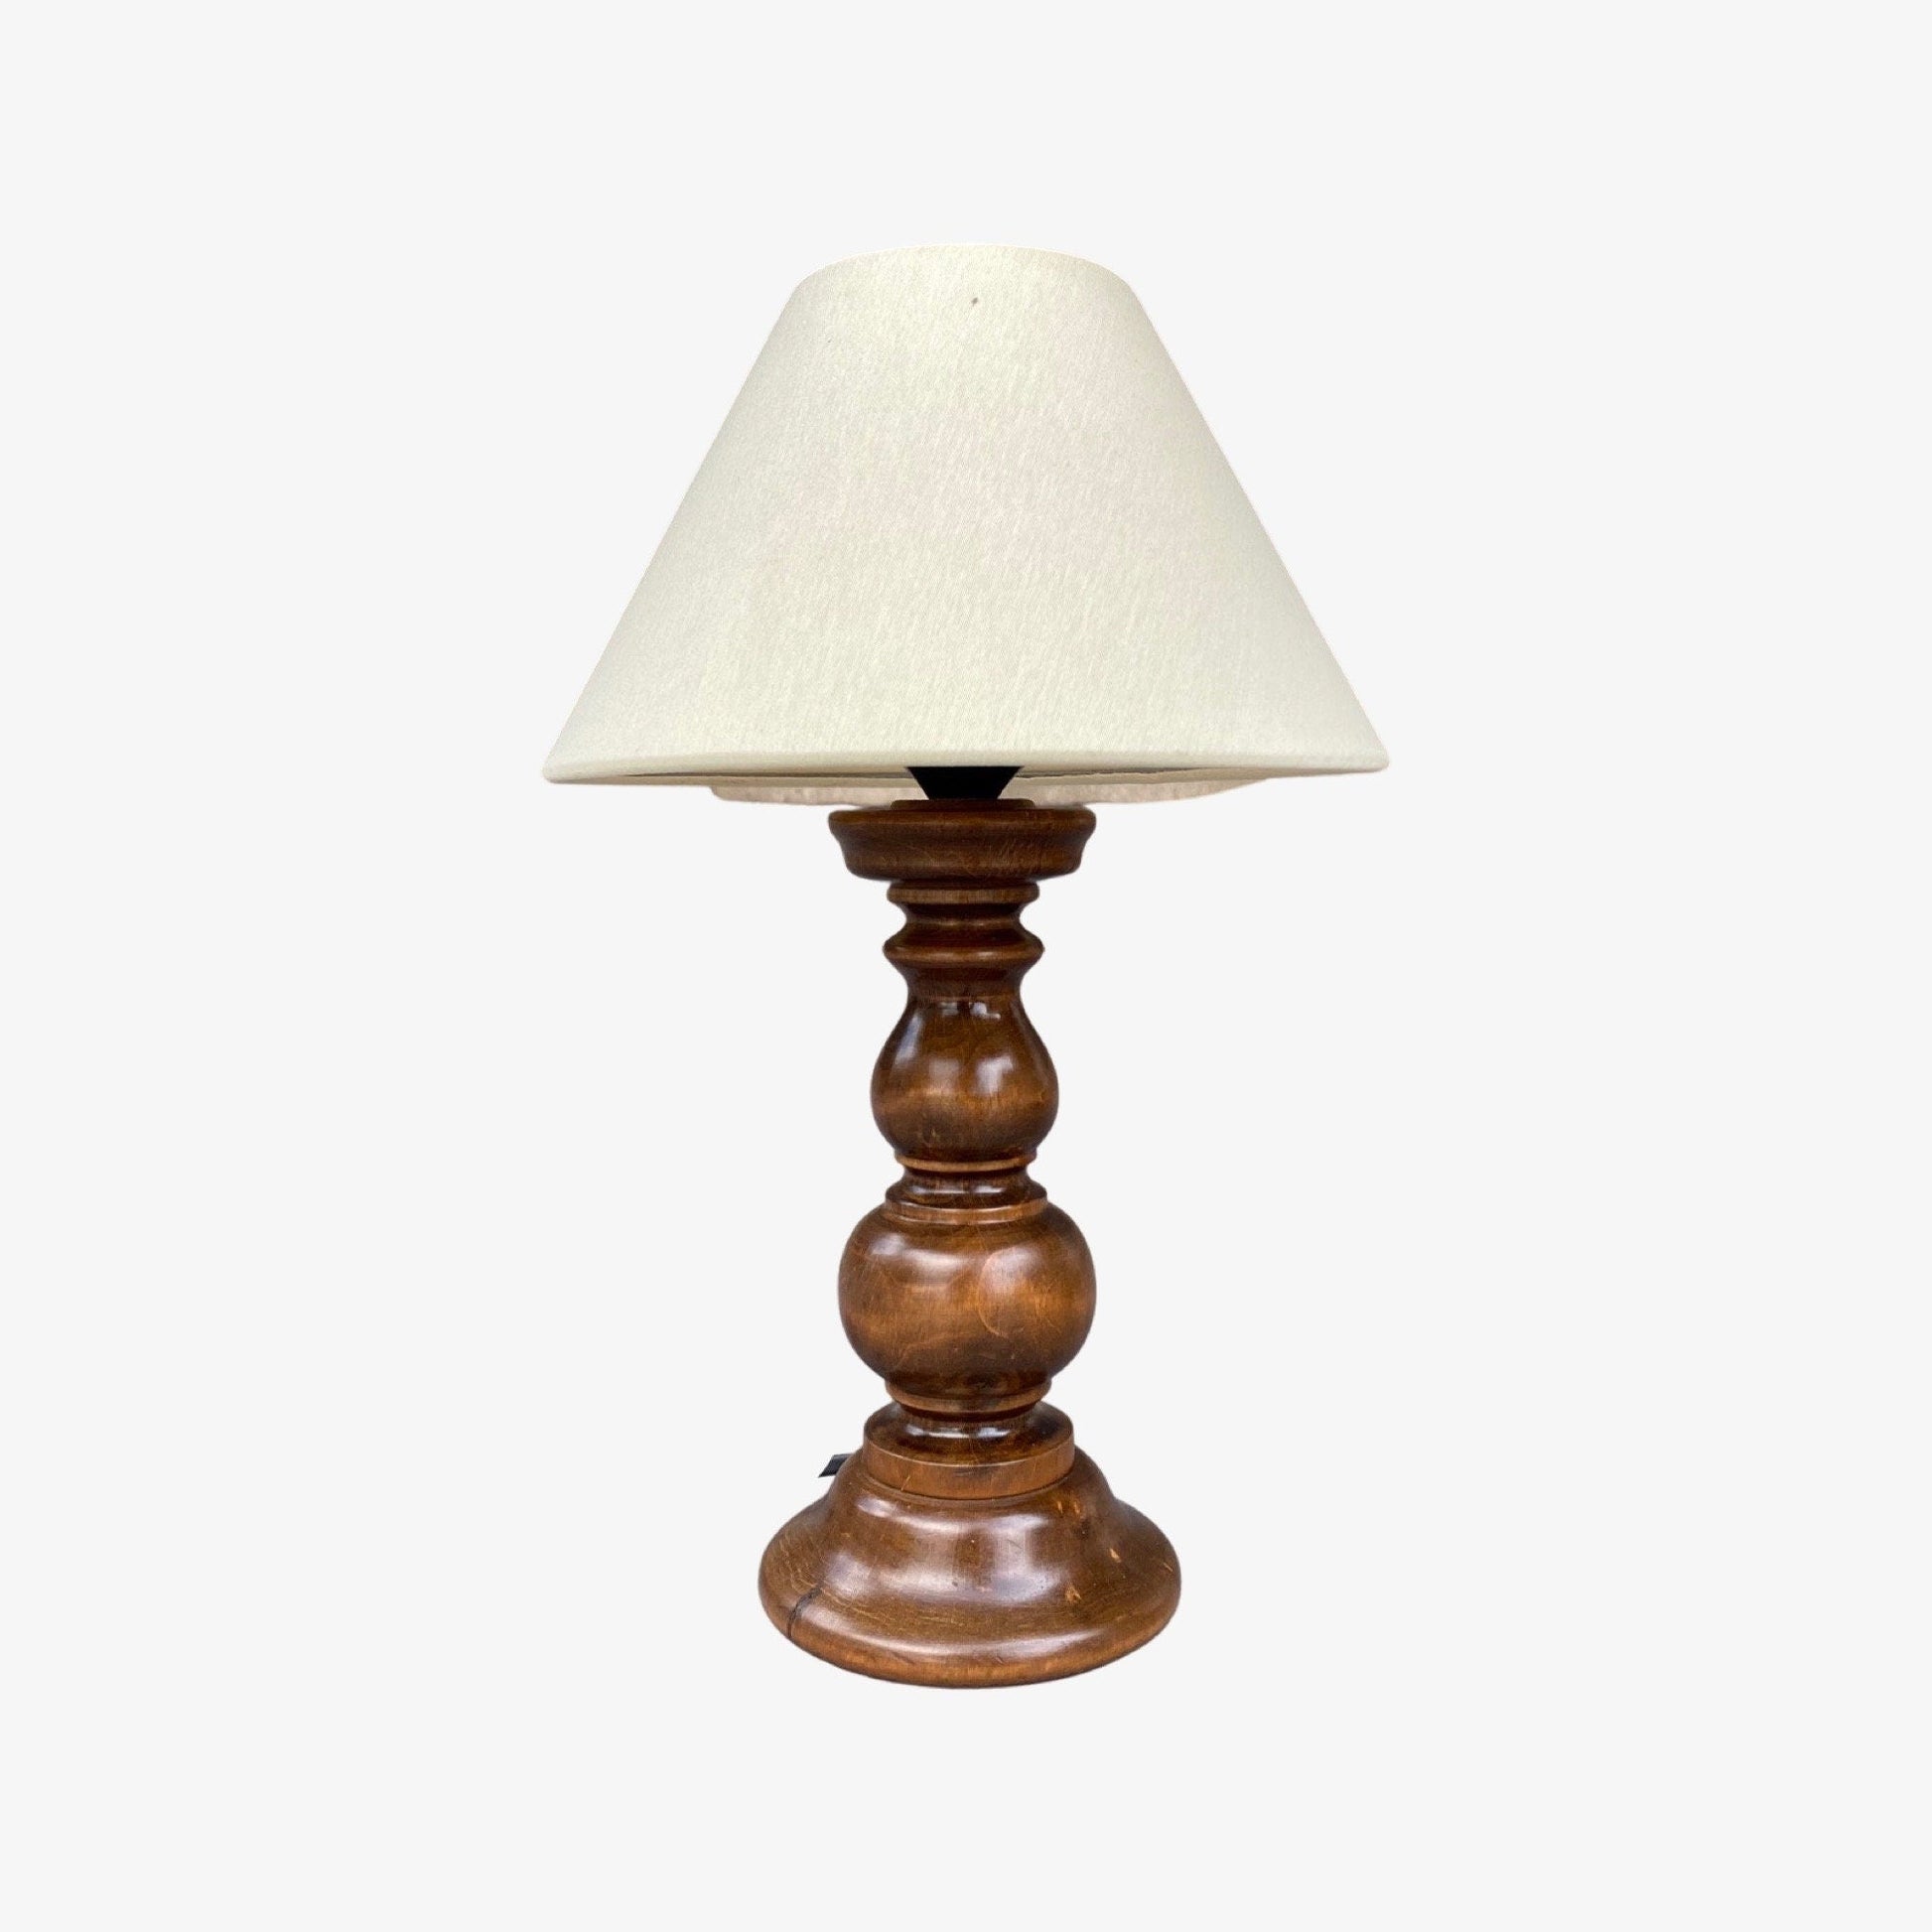 1950s Retro Dark Wood Table Lamp | Vintage Table Lamp Made Of Dark Wood | Vintage Lighting | Mid Century Modern Lighting | Linen Lampshade - FancyVintage.nl -